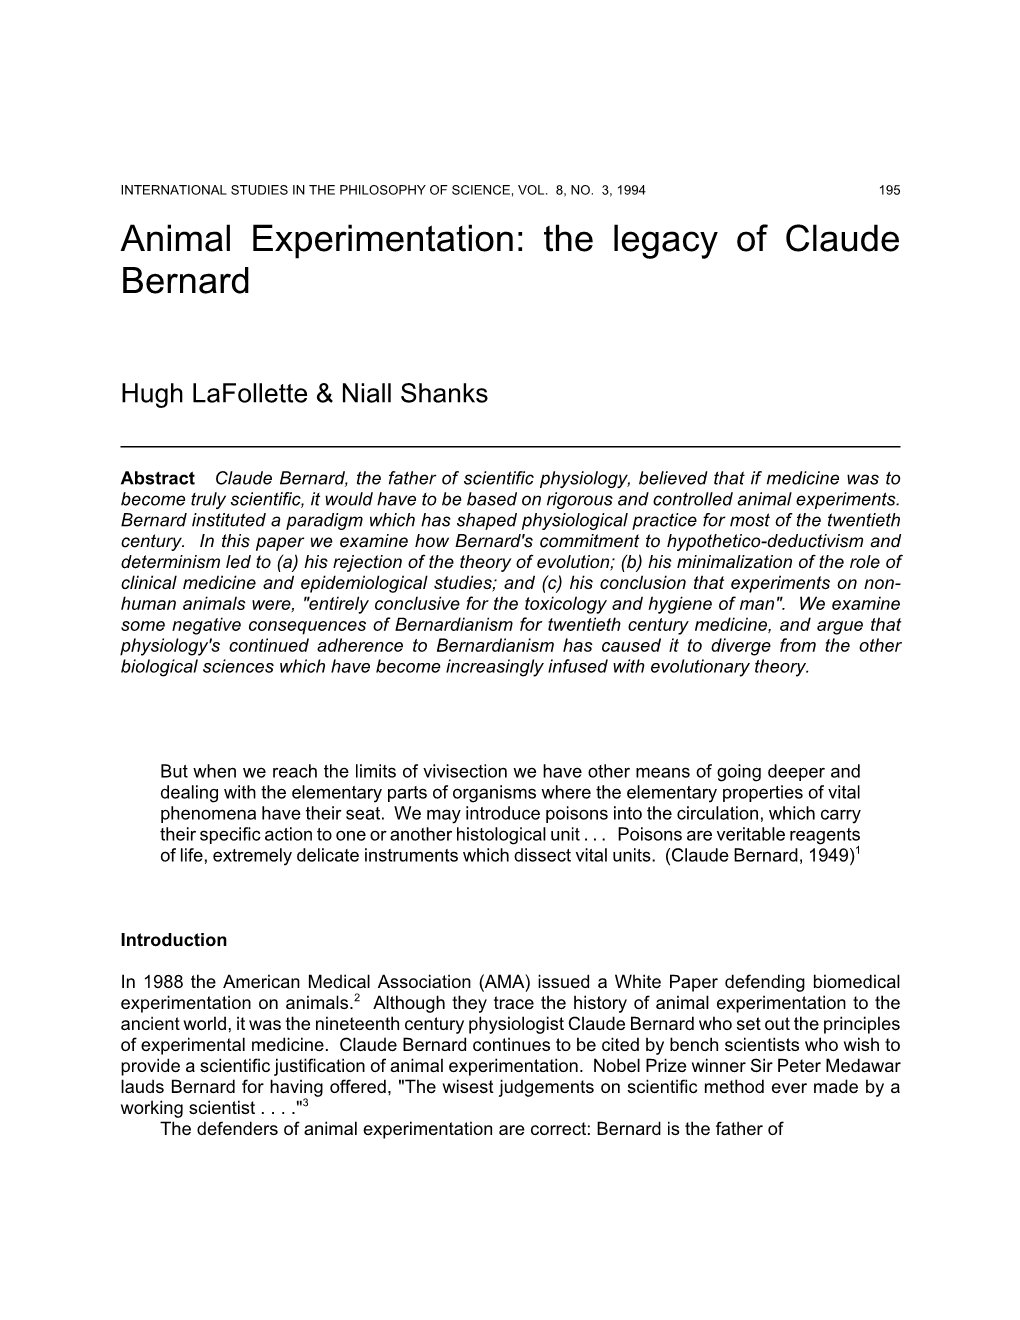 Animal Experimentation: the Legacy of Claude Bernard